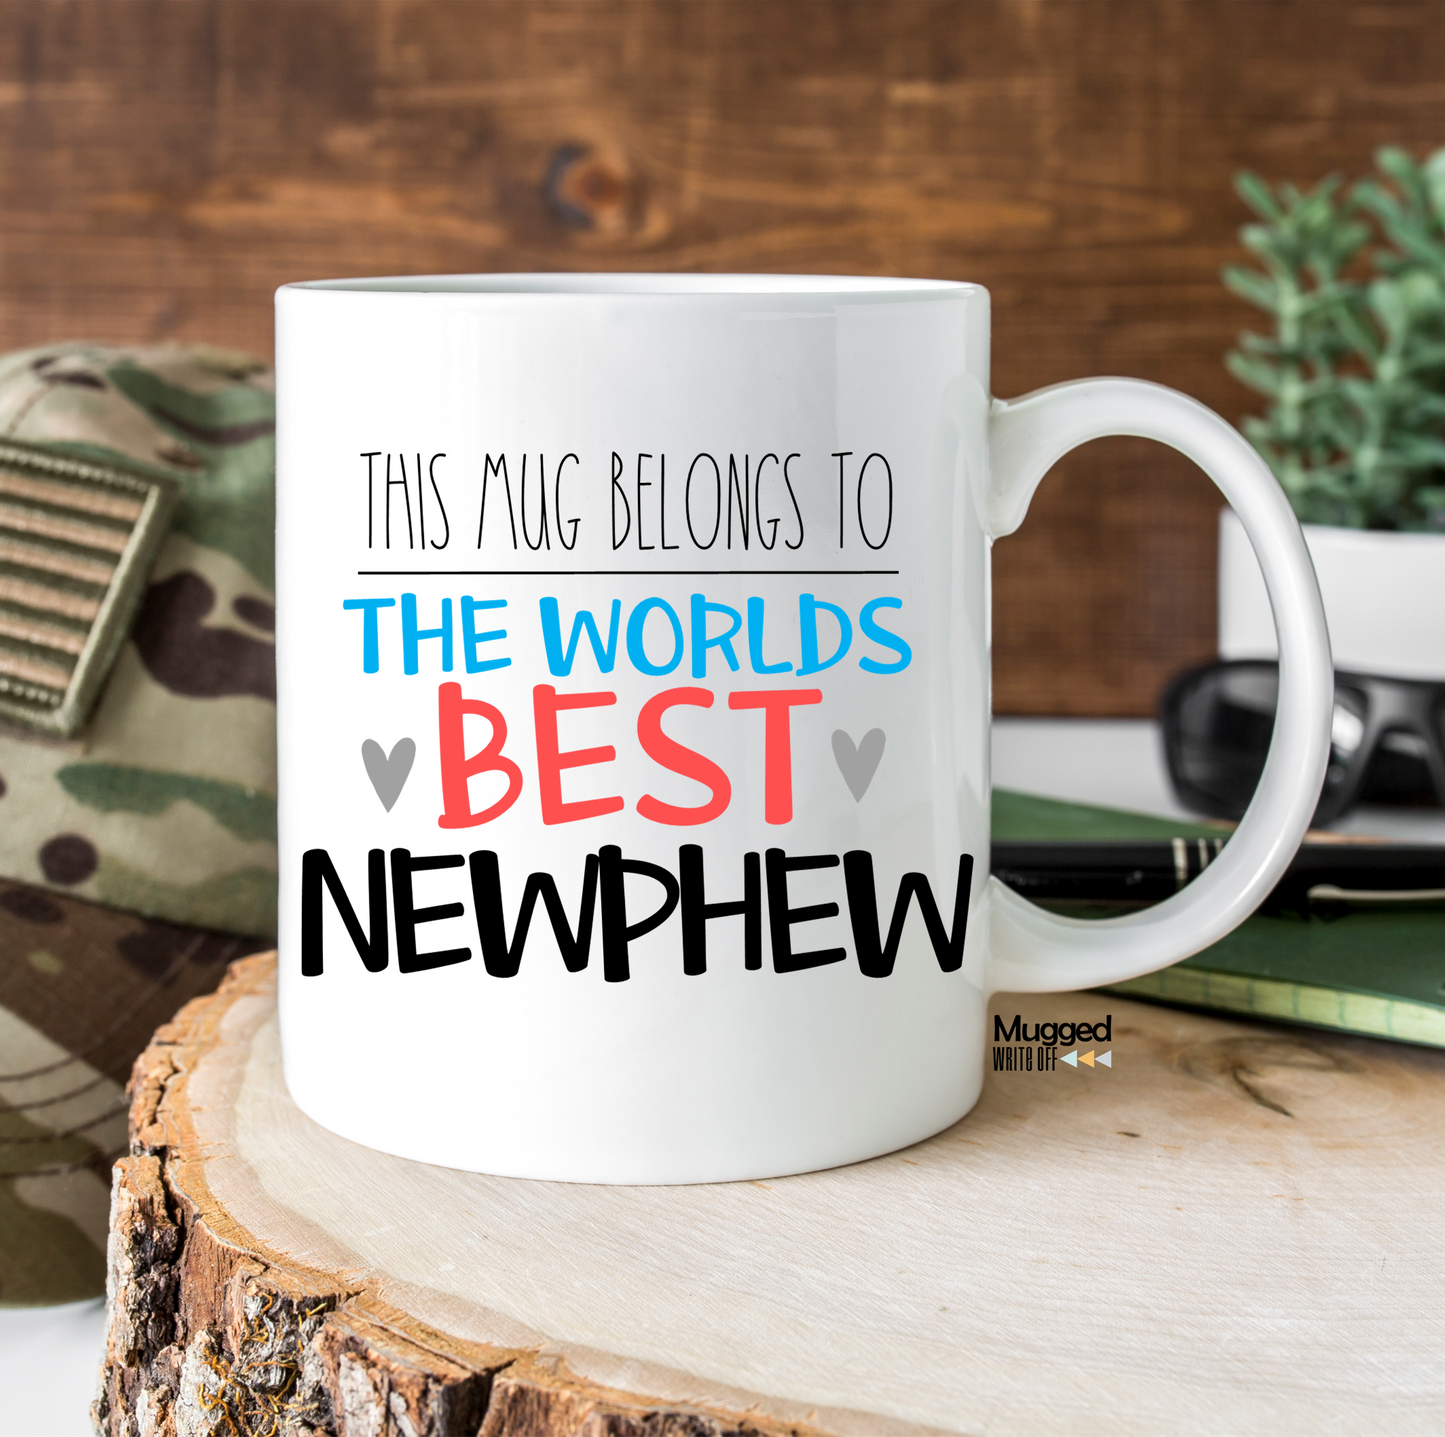 This Mug Belongs To The World's Best Nephew Mug - Mugged Write Off Limited